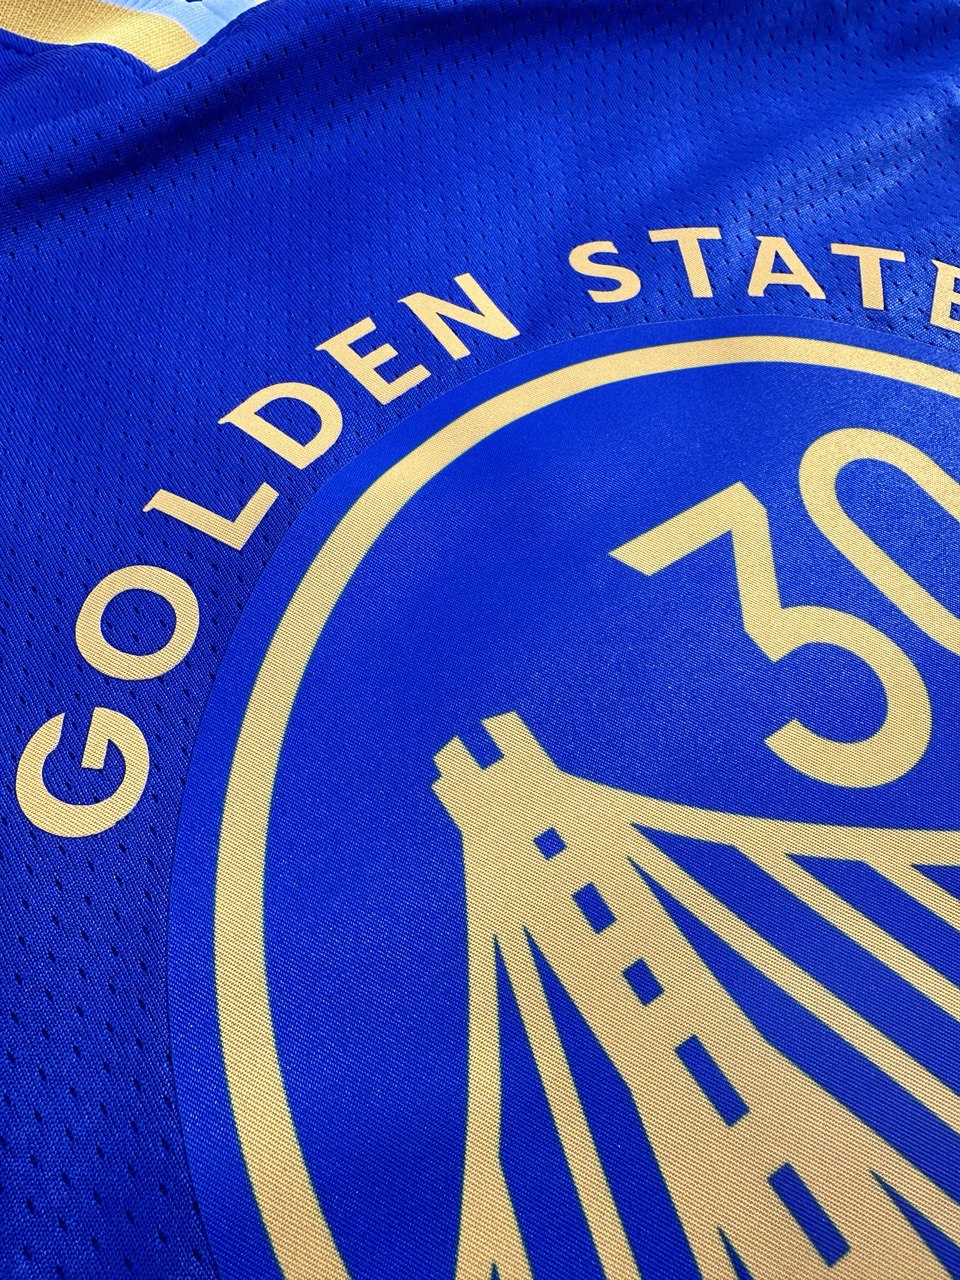 Swingman NBA Player Stephen Curry #30 Golden State Warriors